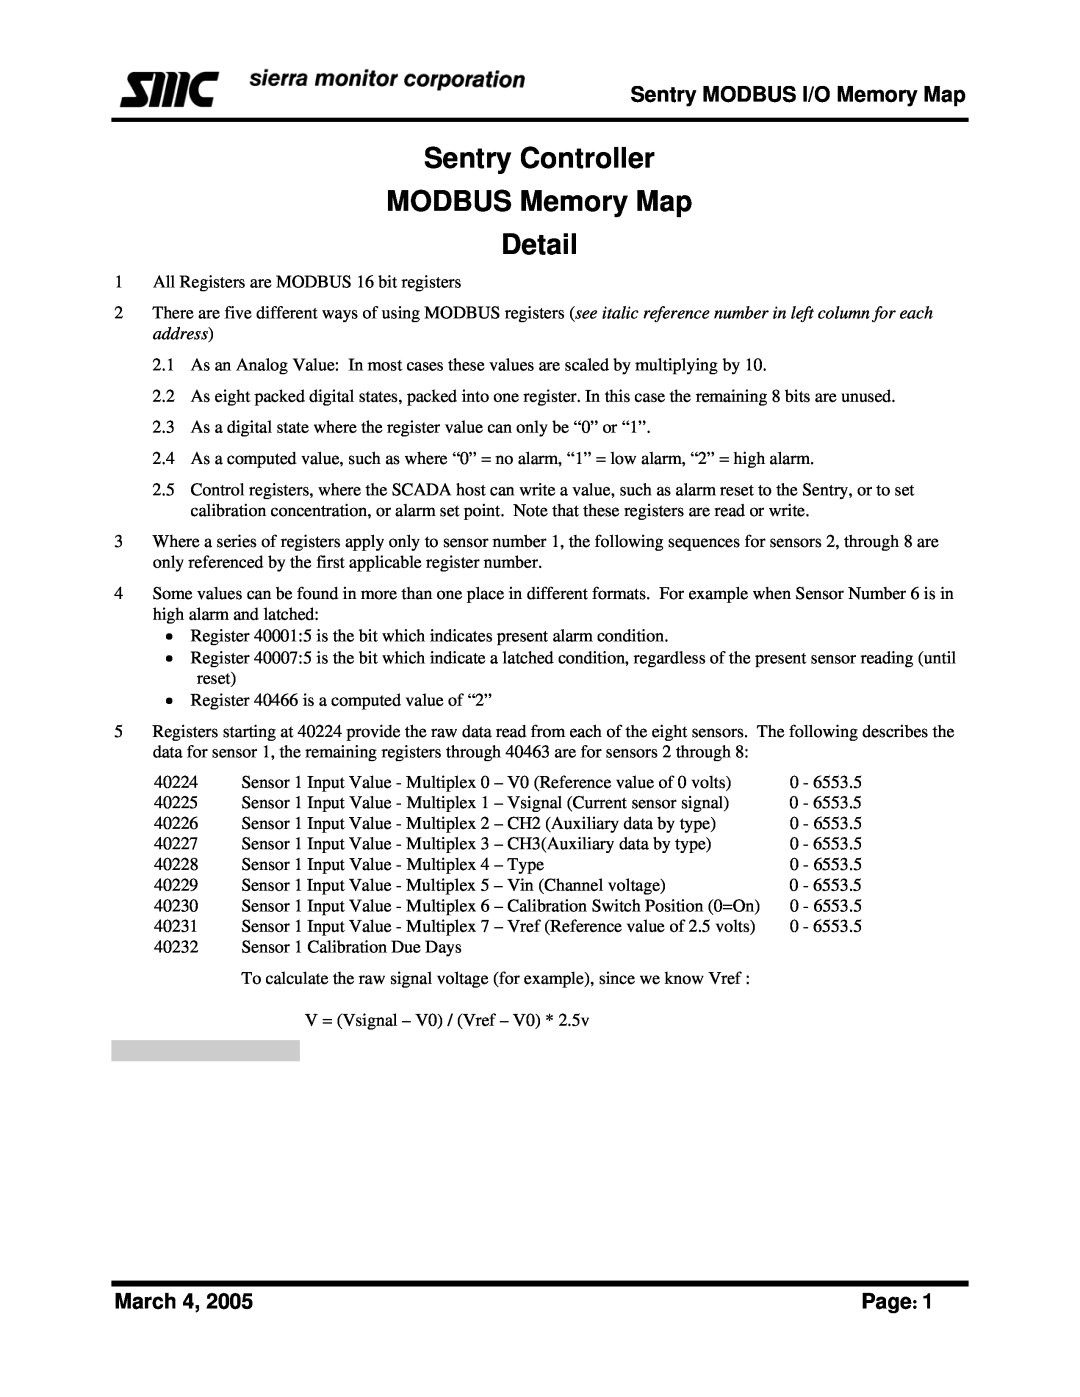 Sierra Monitor Corporation Gas Detector Sentry Controller MODBUS Memory Map Detail, Sentry MODBUS I/O Memory Map, March 